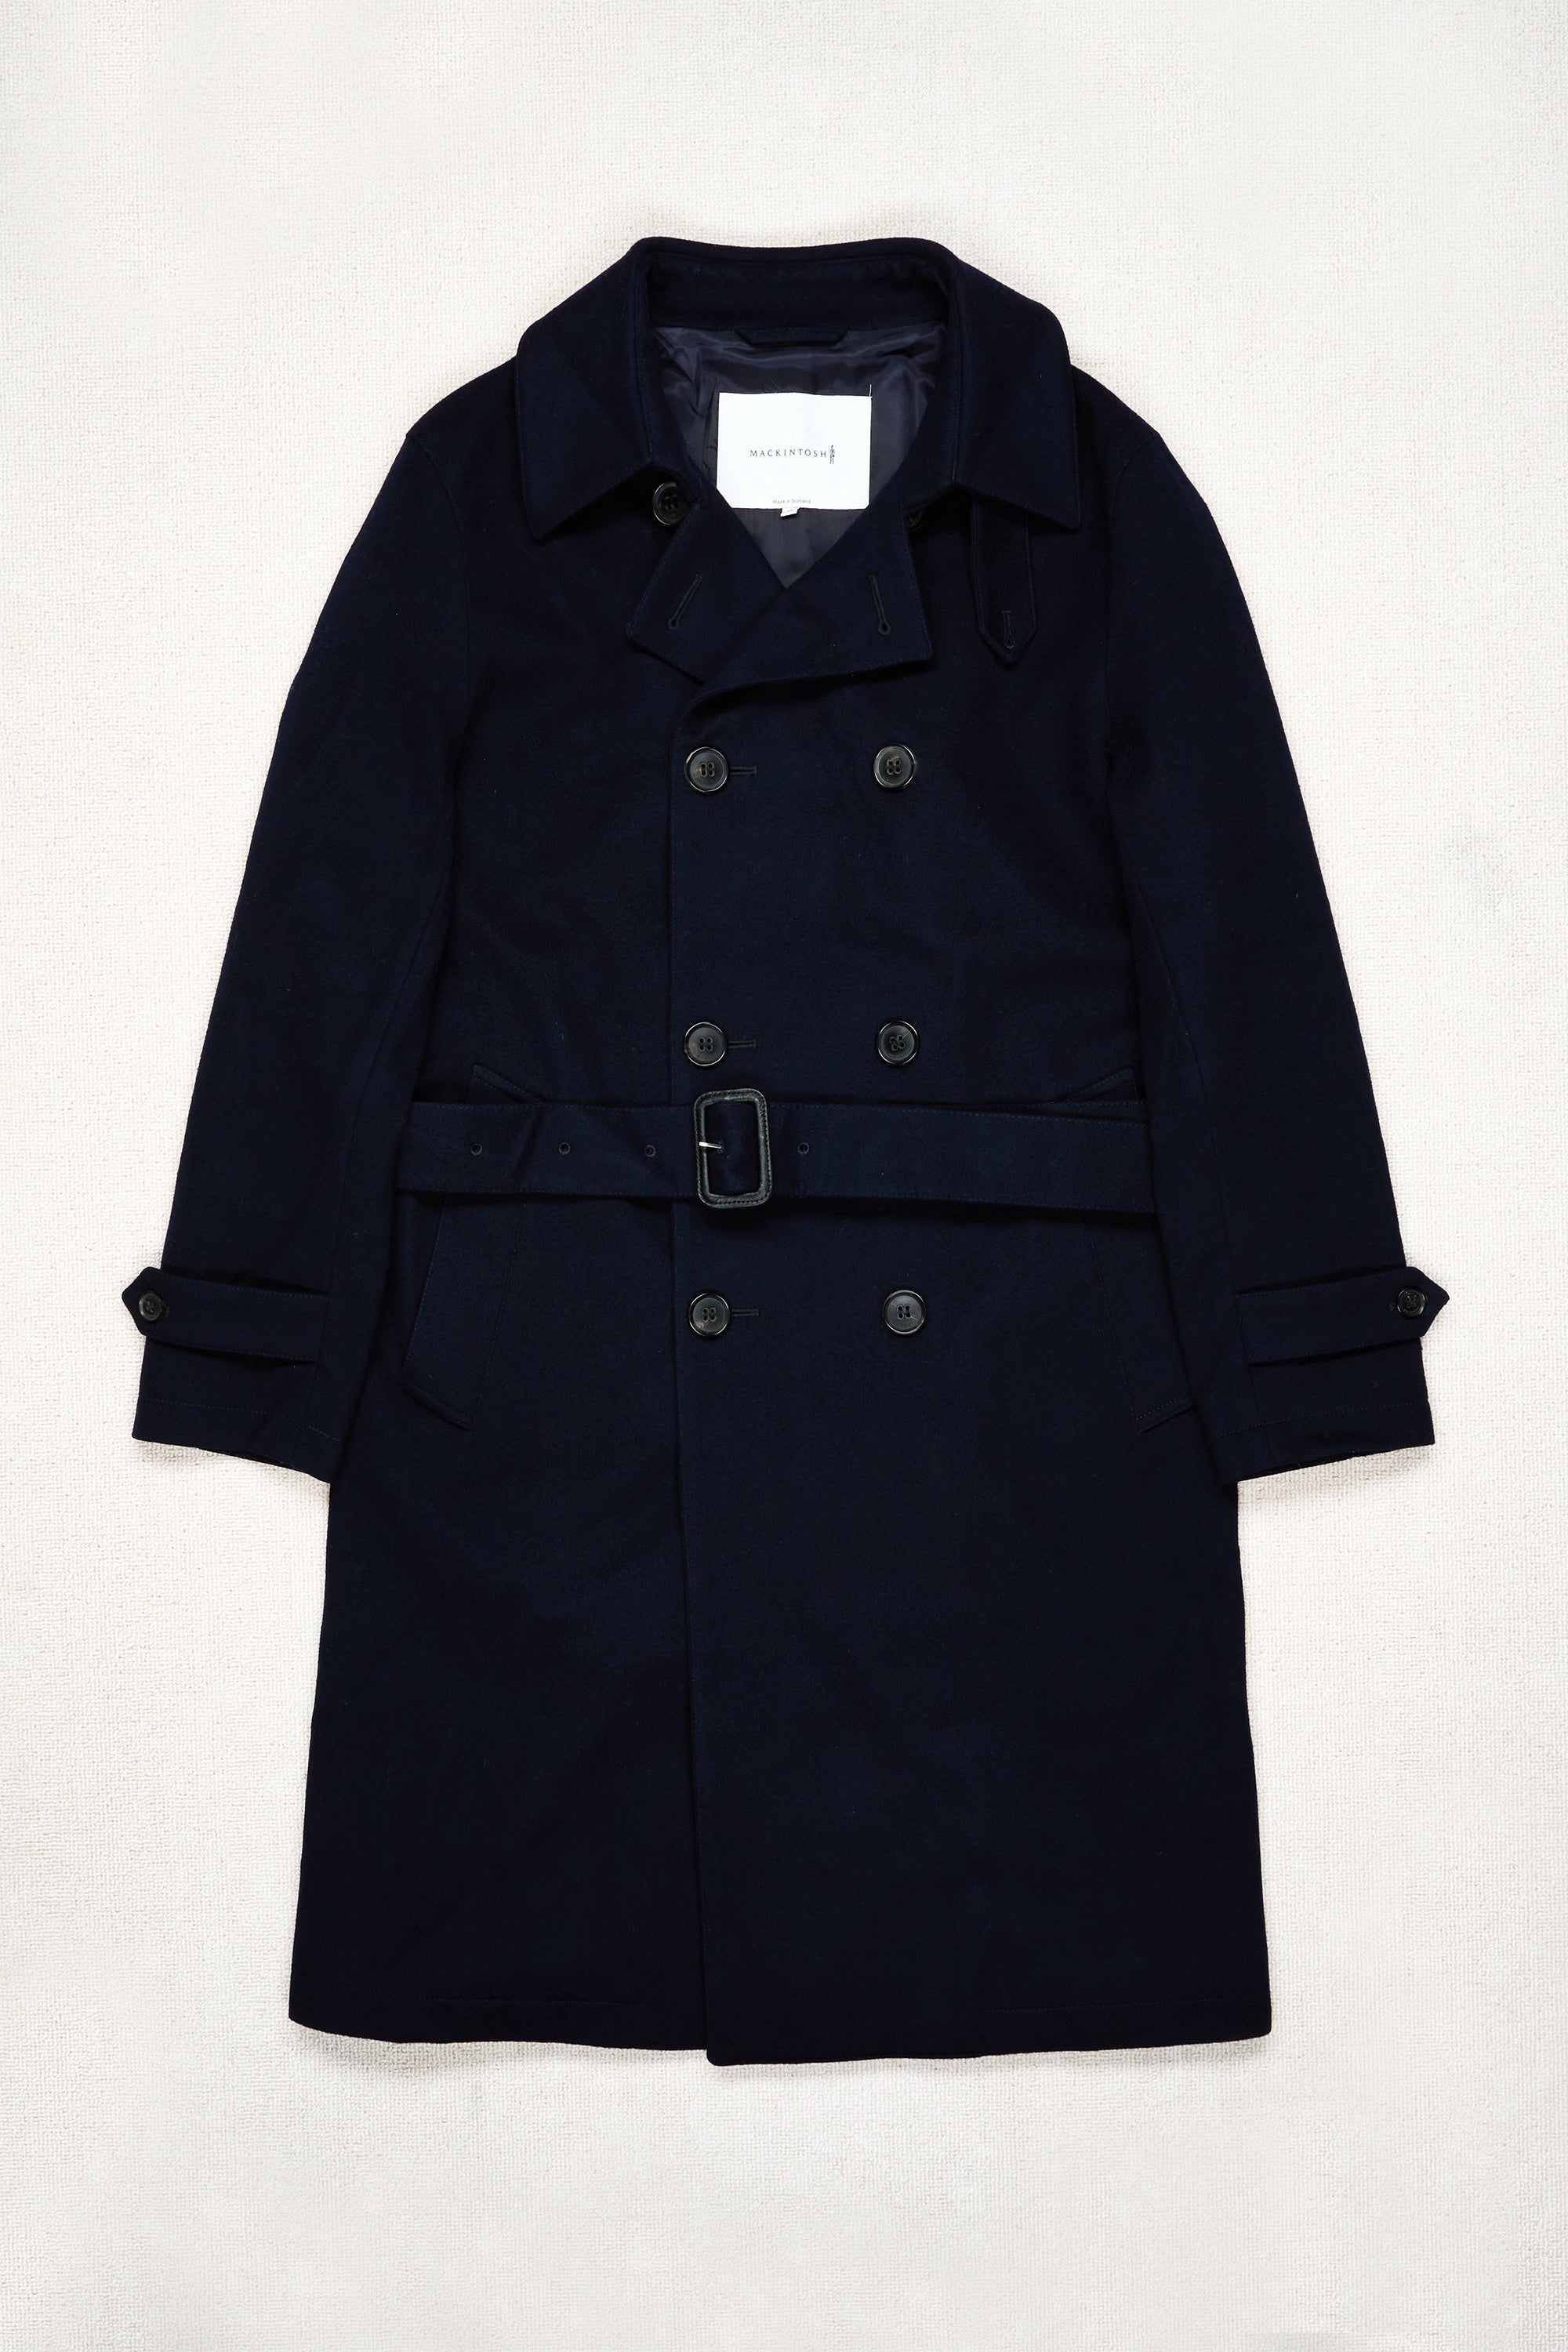 Mackintosh Navy Wool Double Breasted Overcoat